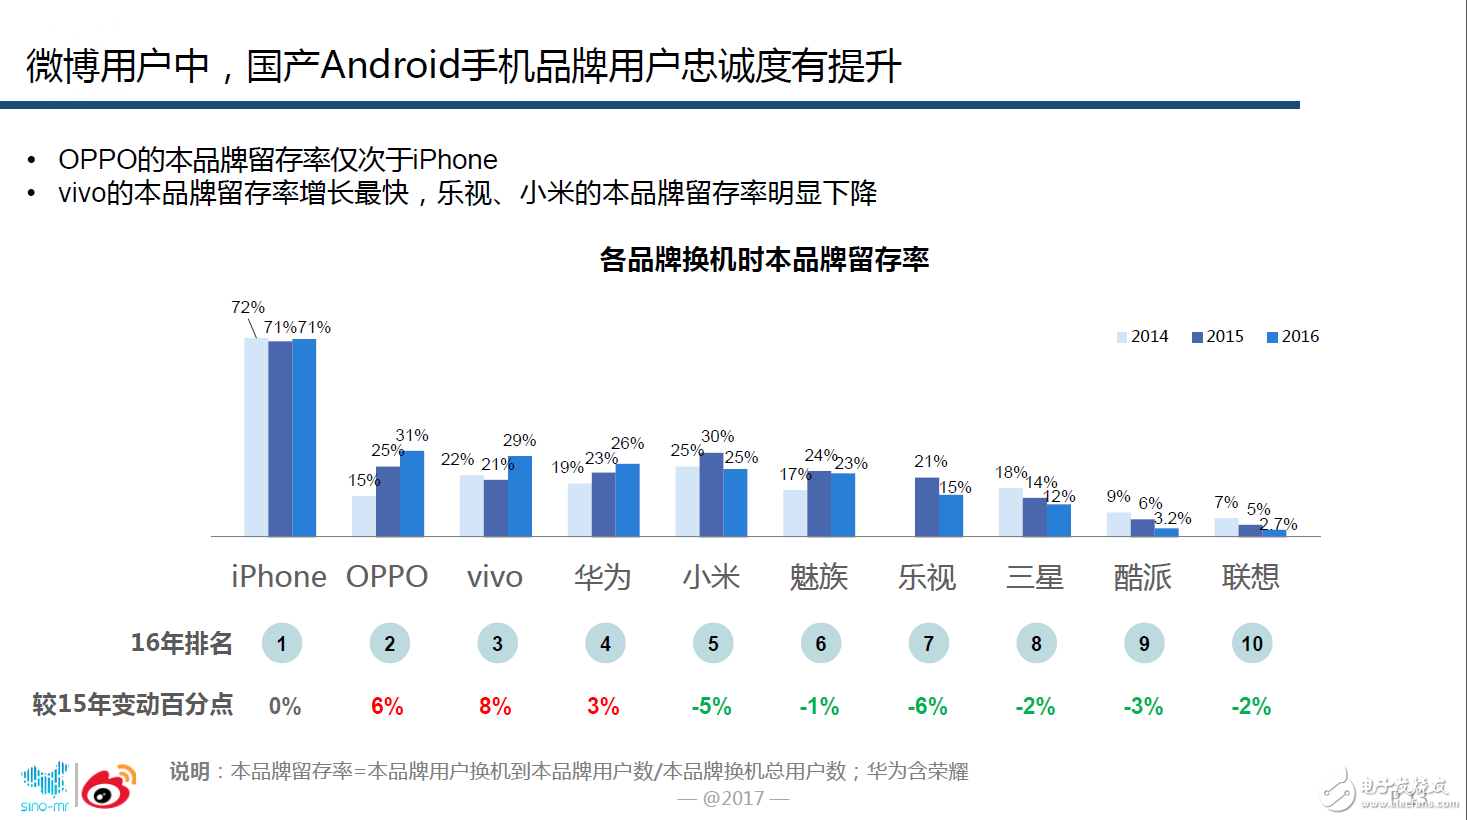 oppor9s评测,微博大数据证实OPPO手机忠诚度最高